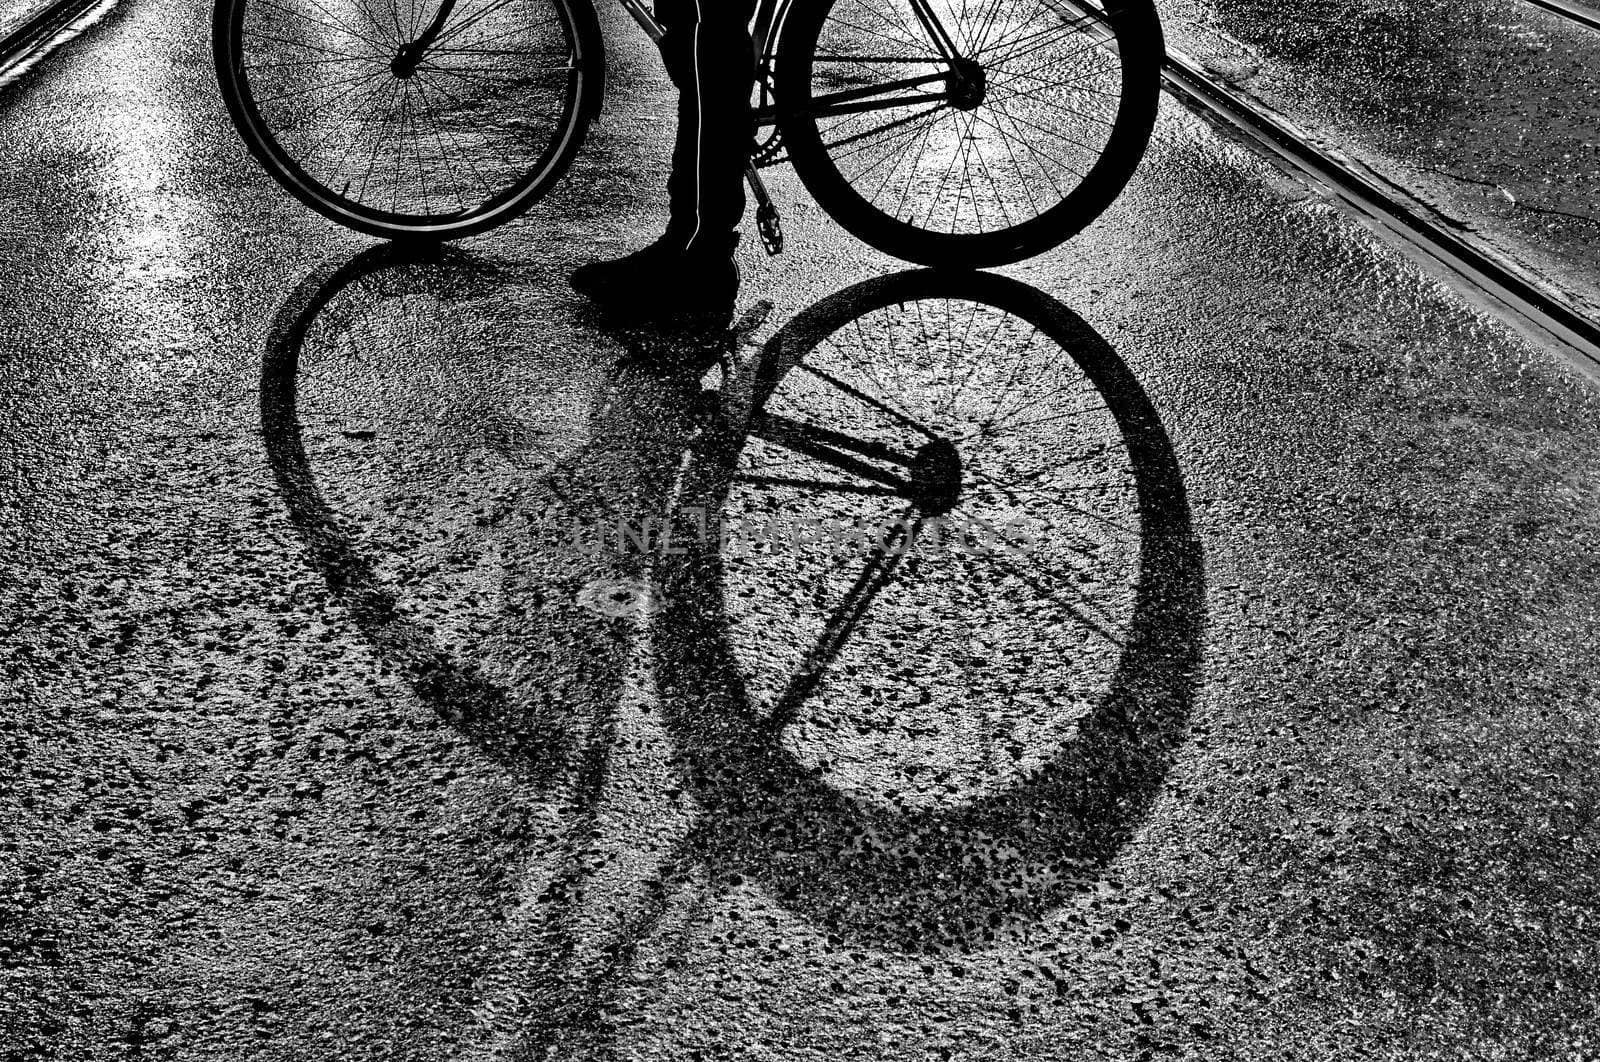 Strange shadows of the wheels of a bike